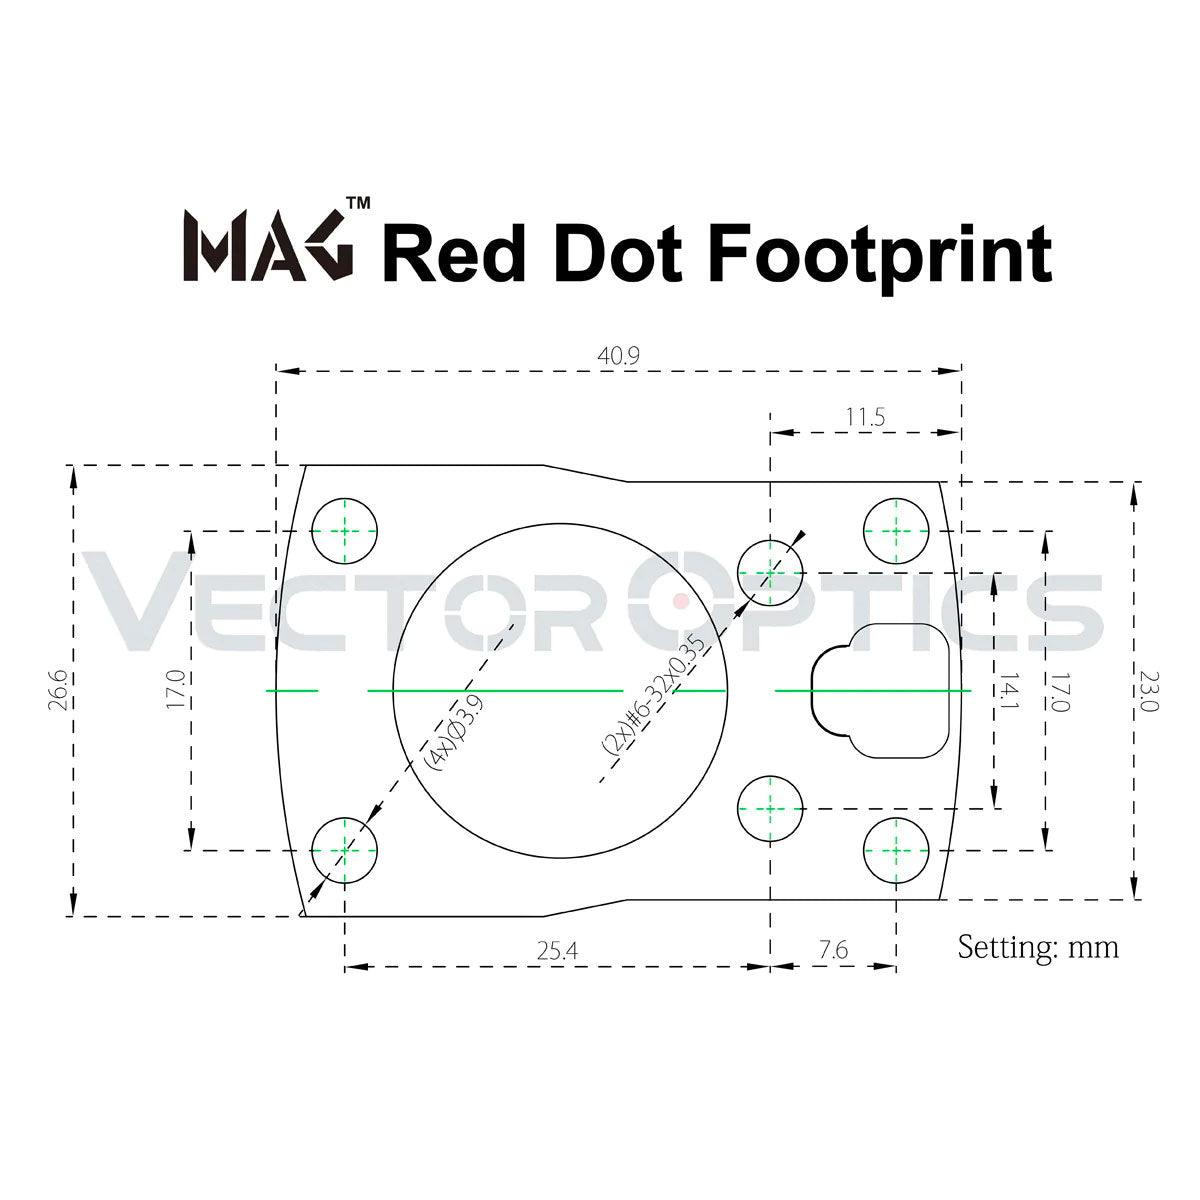 Vector Optics Viseur point rouge FRENZY-S 1X17X24 MIC 3MOA FDE - RedDotSight